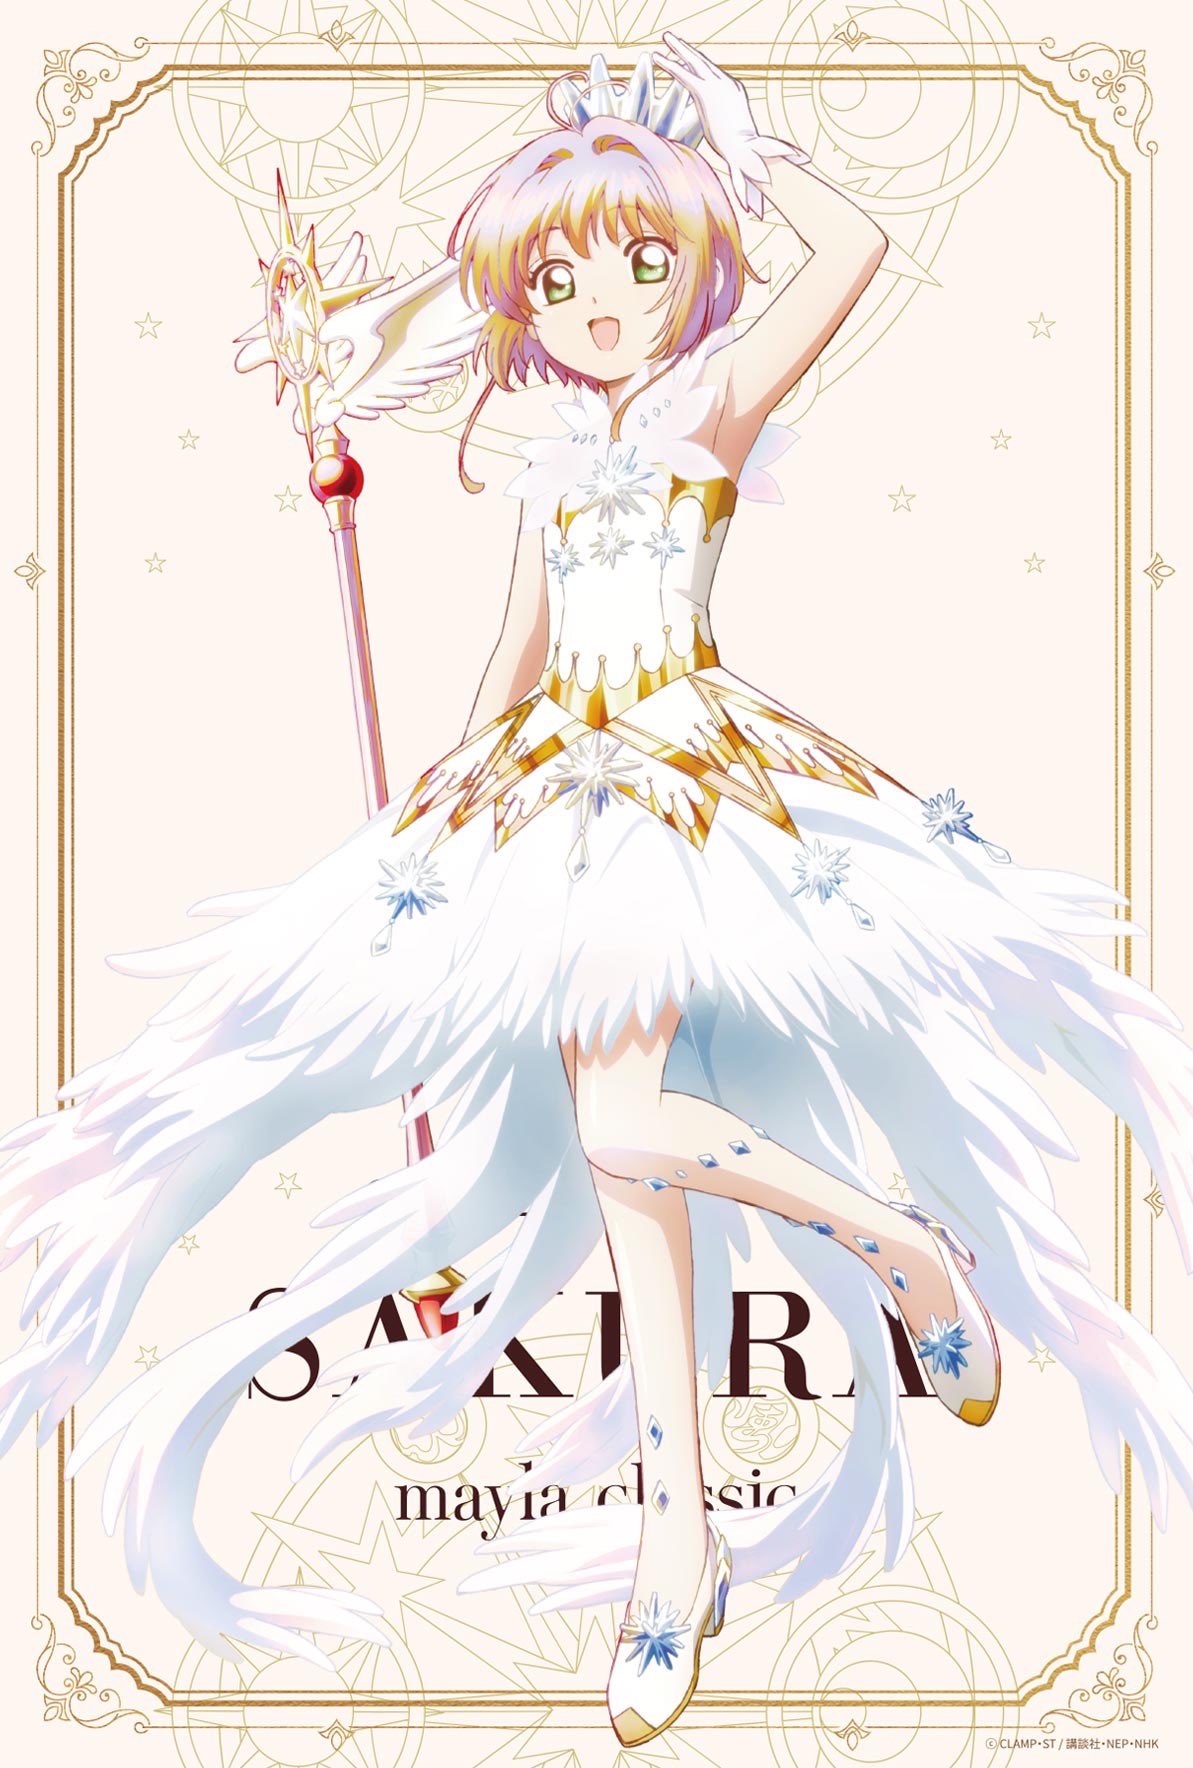 Second collaboration Cardcaptor Sakura x Mayla Classic "Clear"